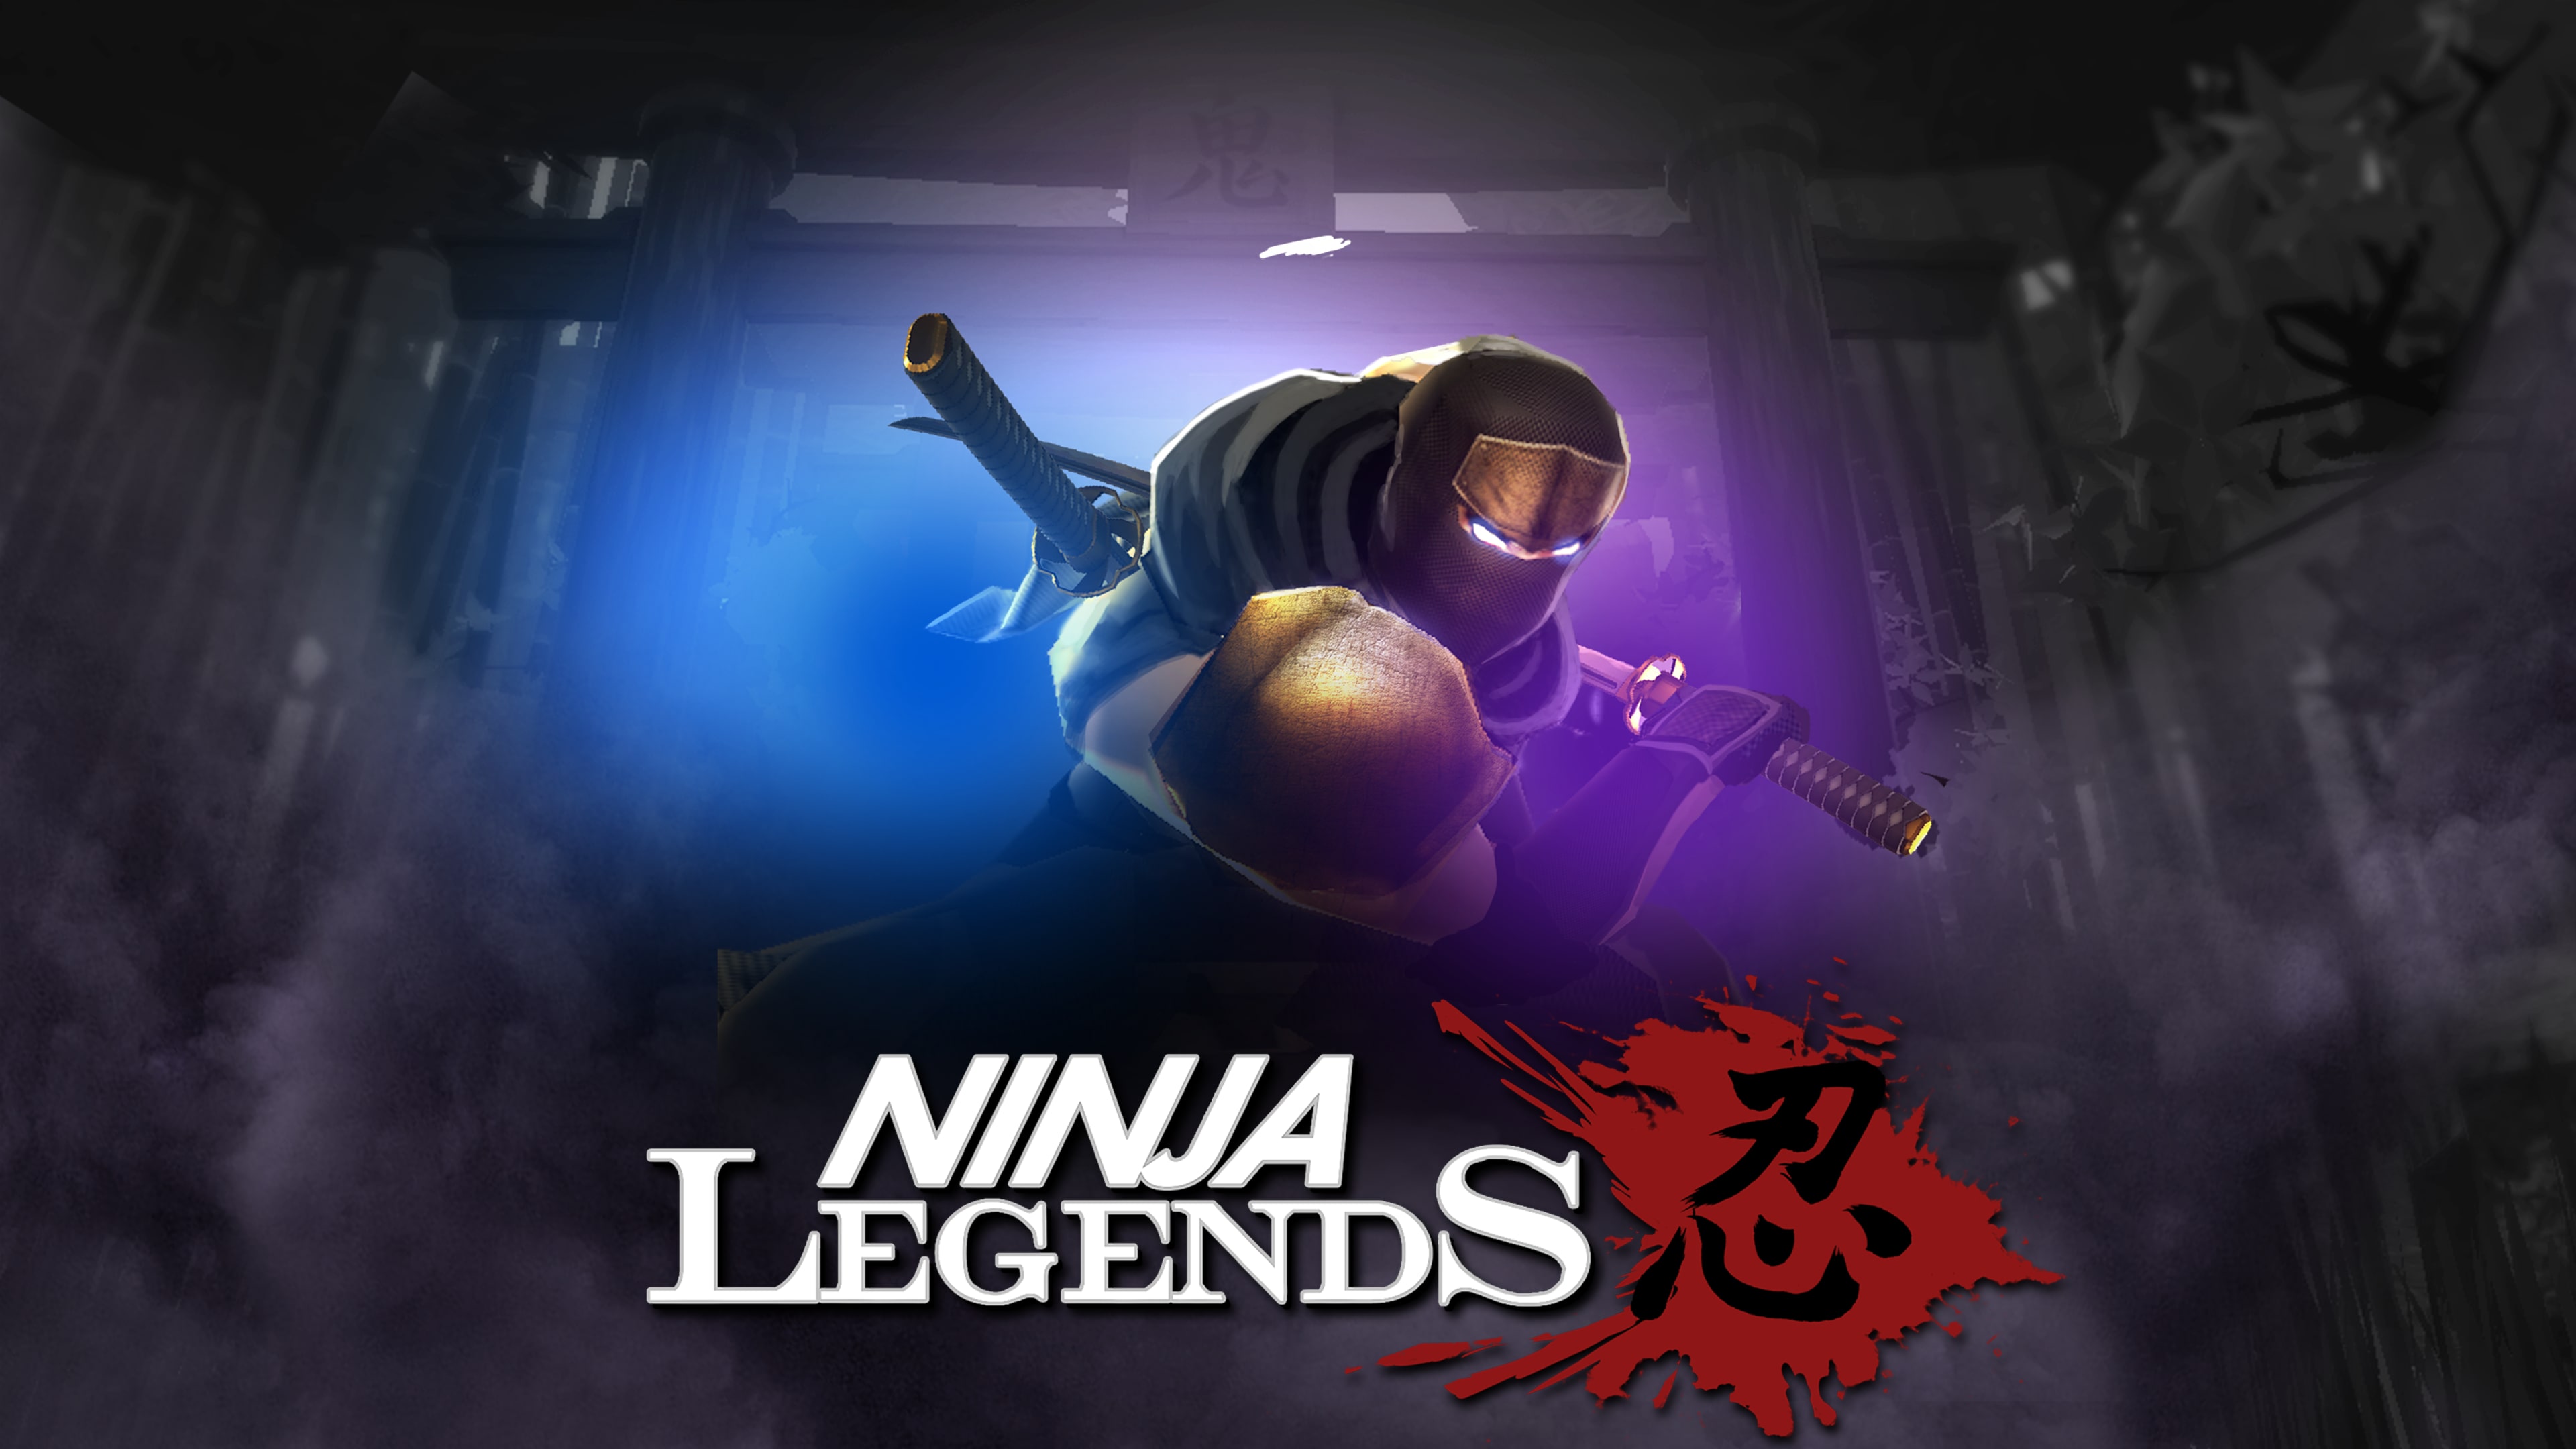 ps4 ninja games